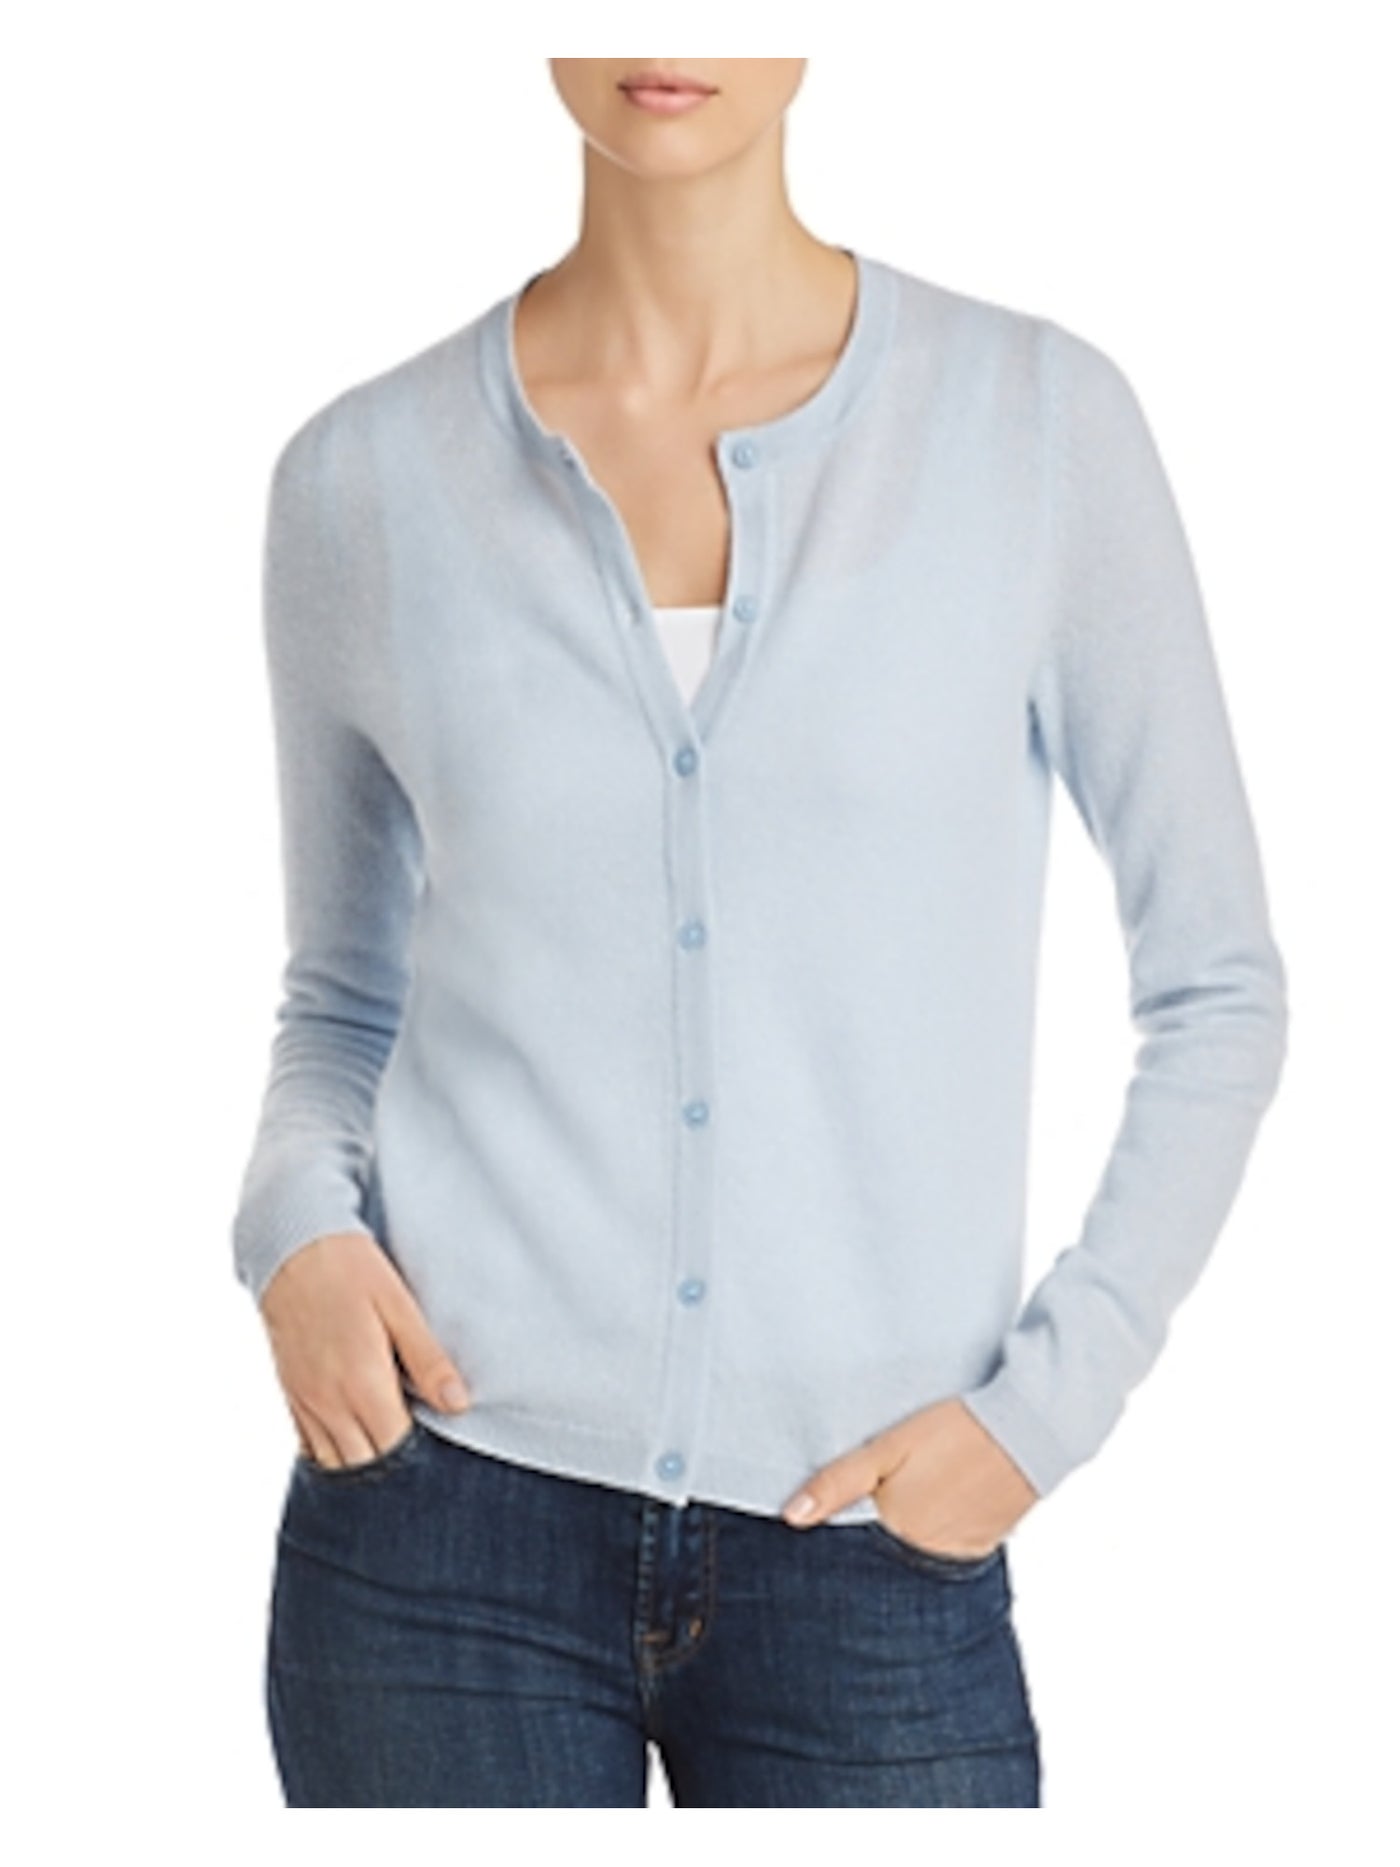 C Womens Light Blue Cashmere Long Sleeve Crew Neck Button Up Sweater M